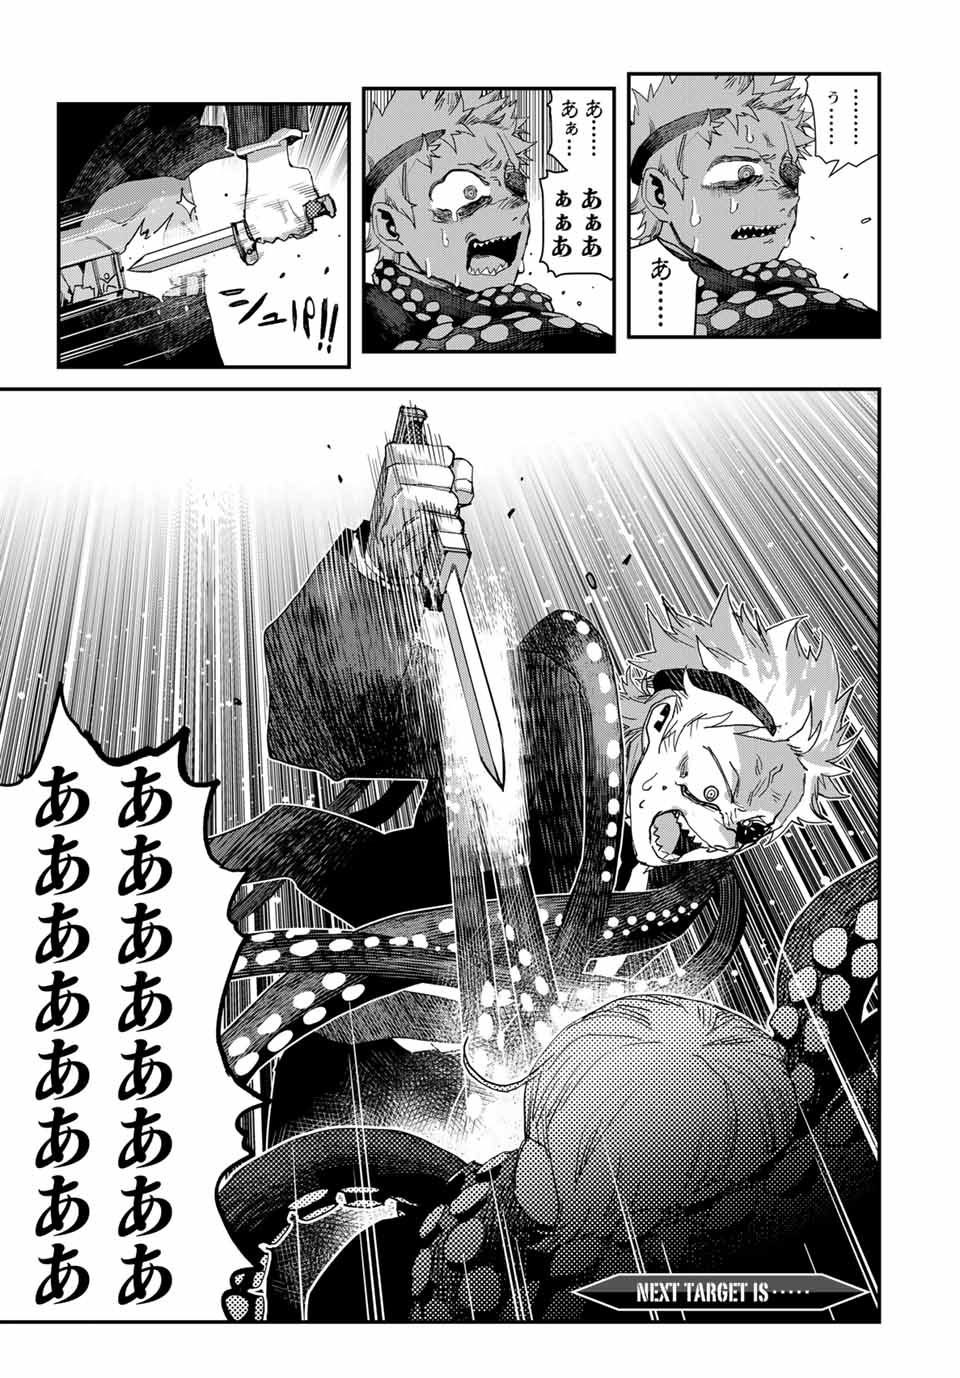 戦車椅子-TANK CHAIR- 第43話 - Page 21